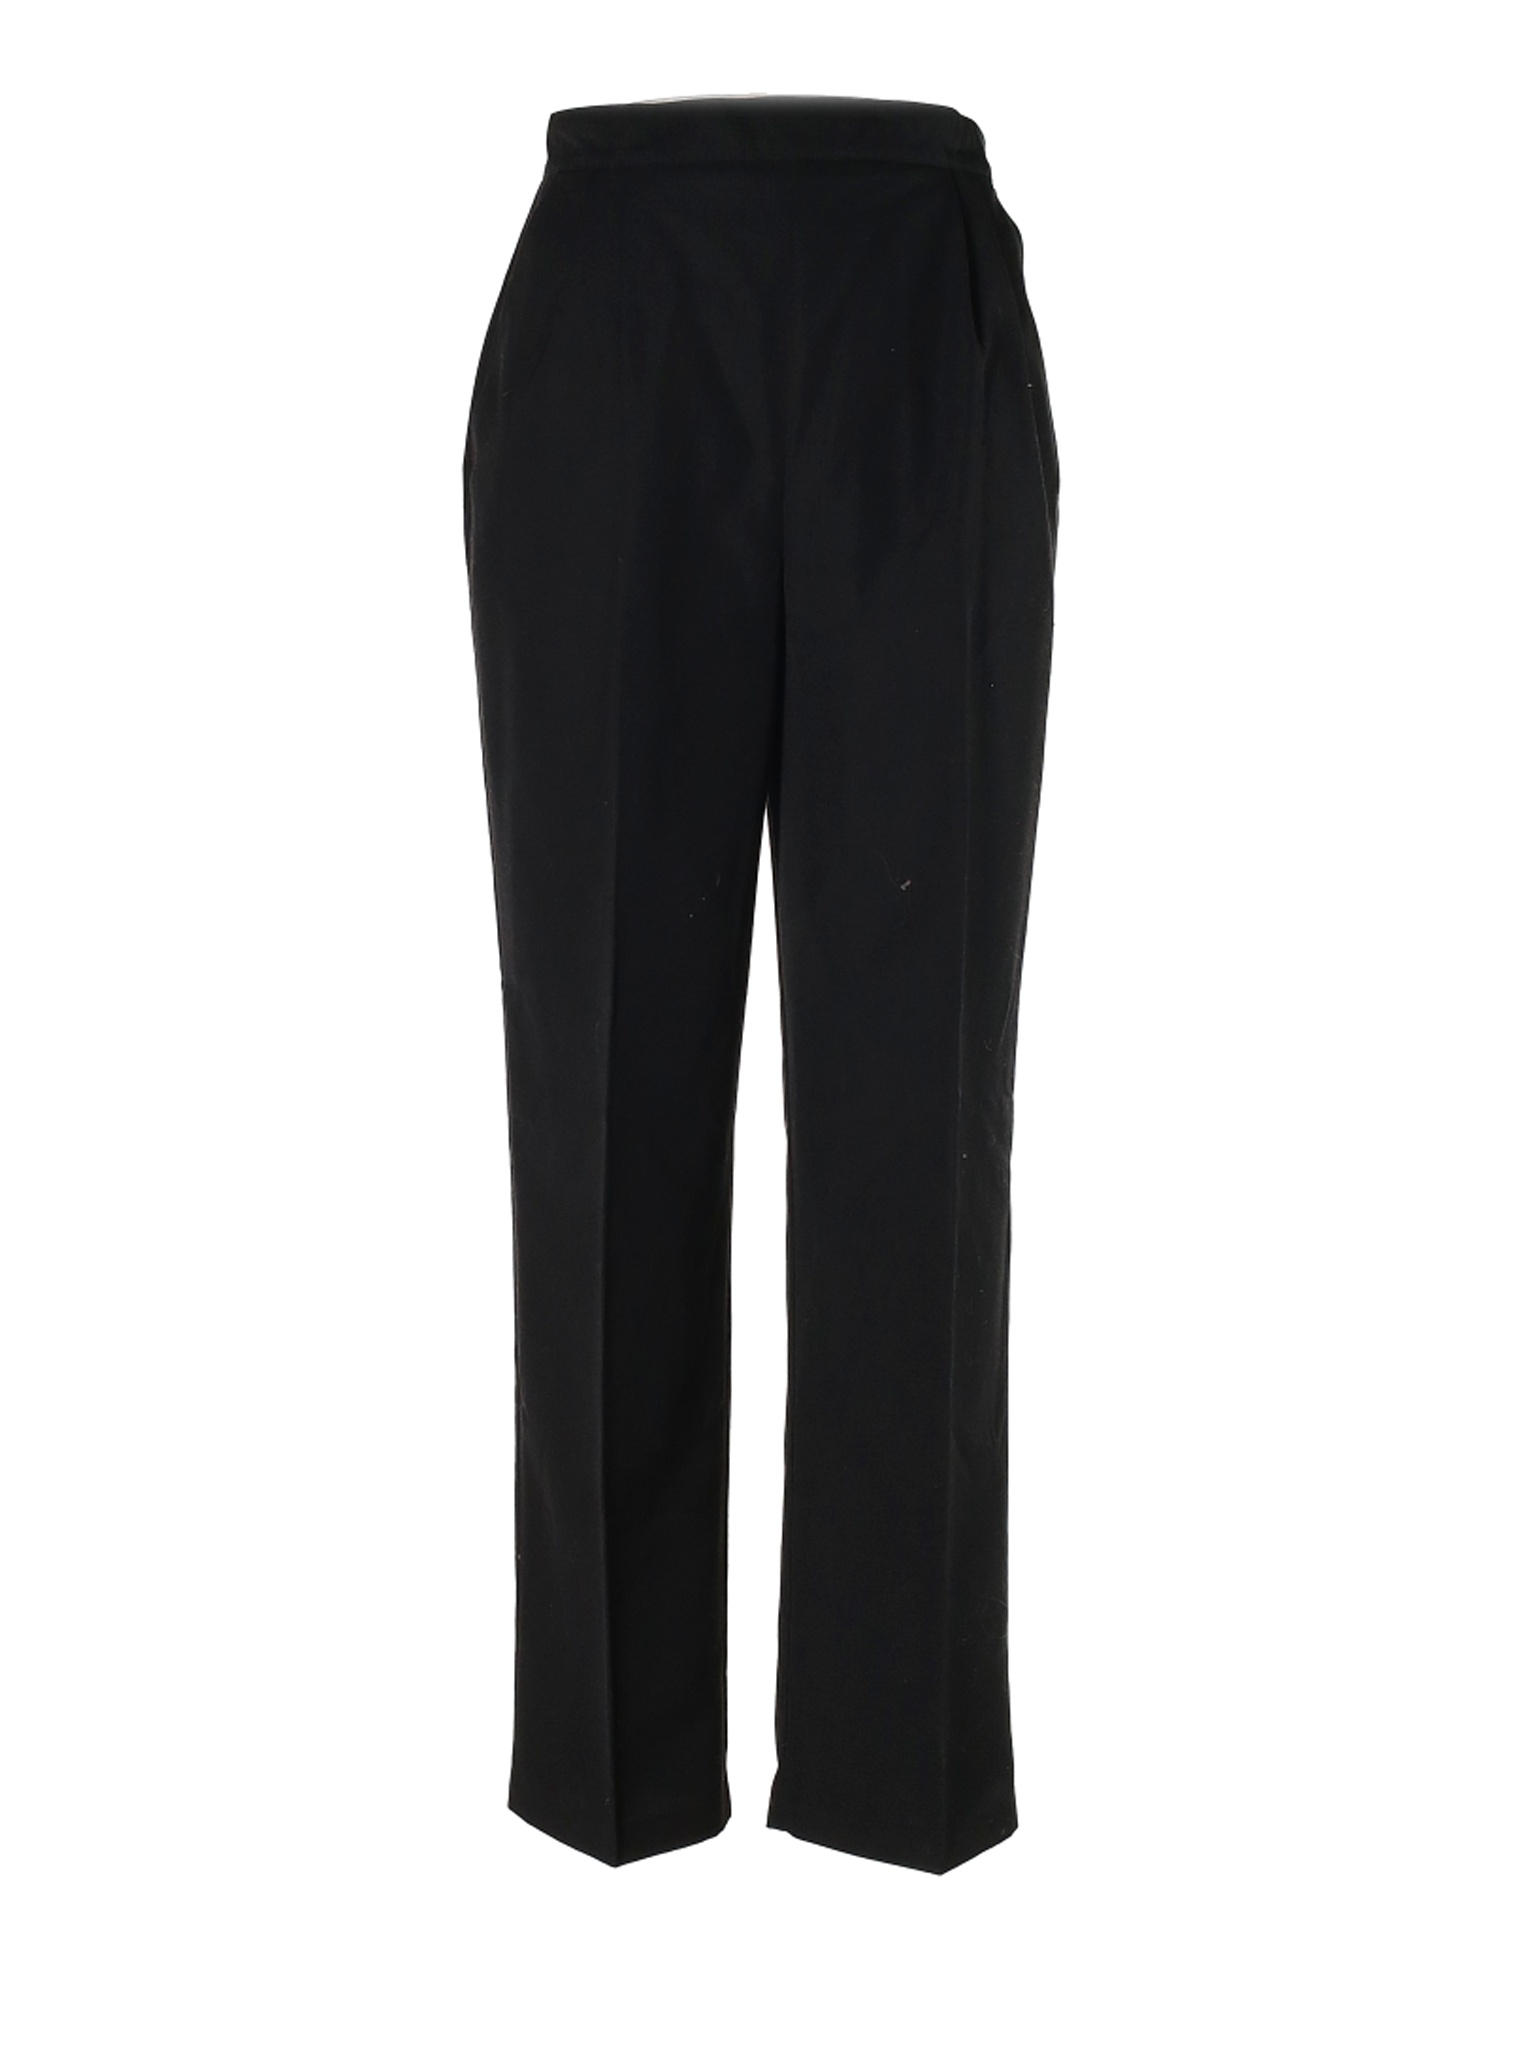 Assorted Brands Women Black Dress Pants 18 Plus | eBay